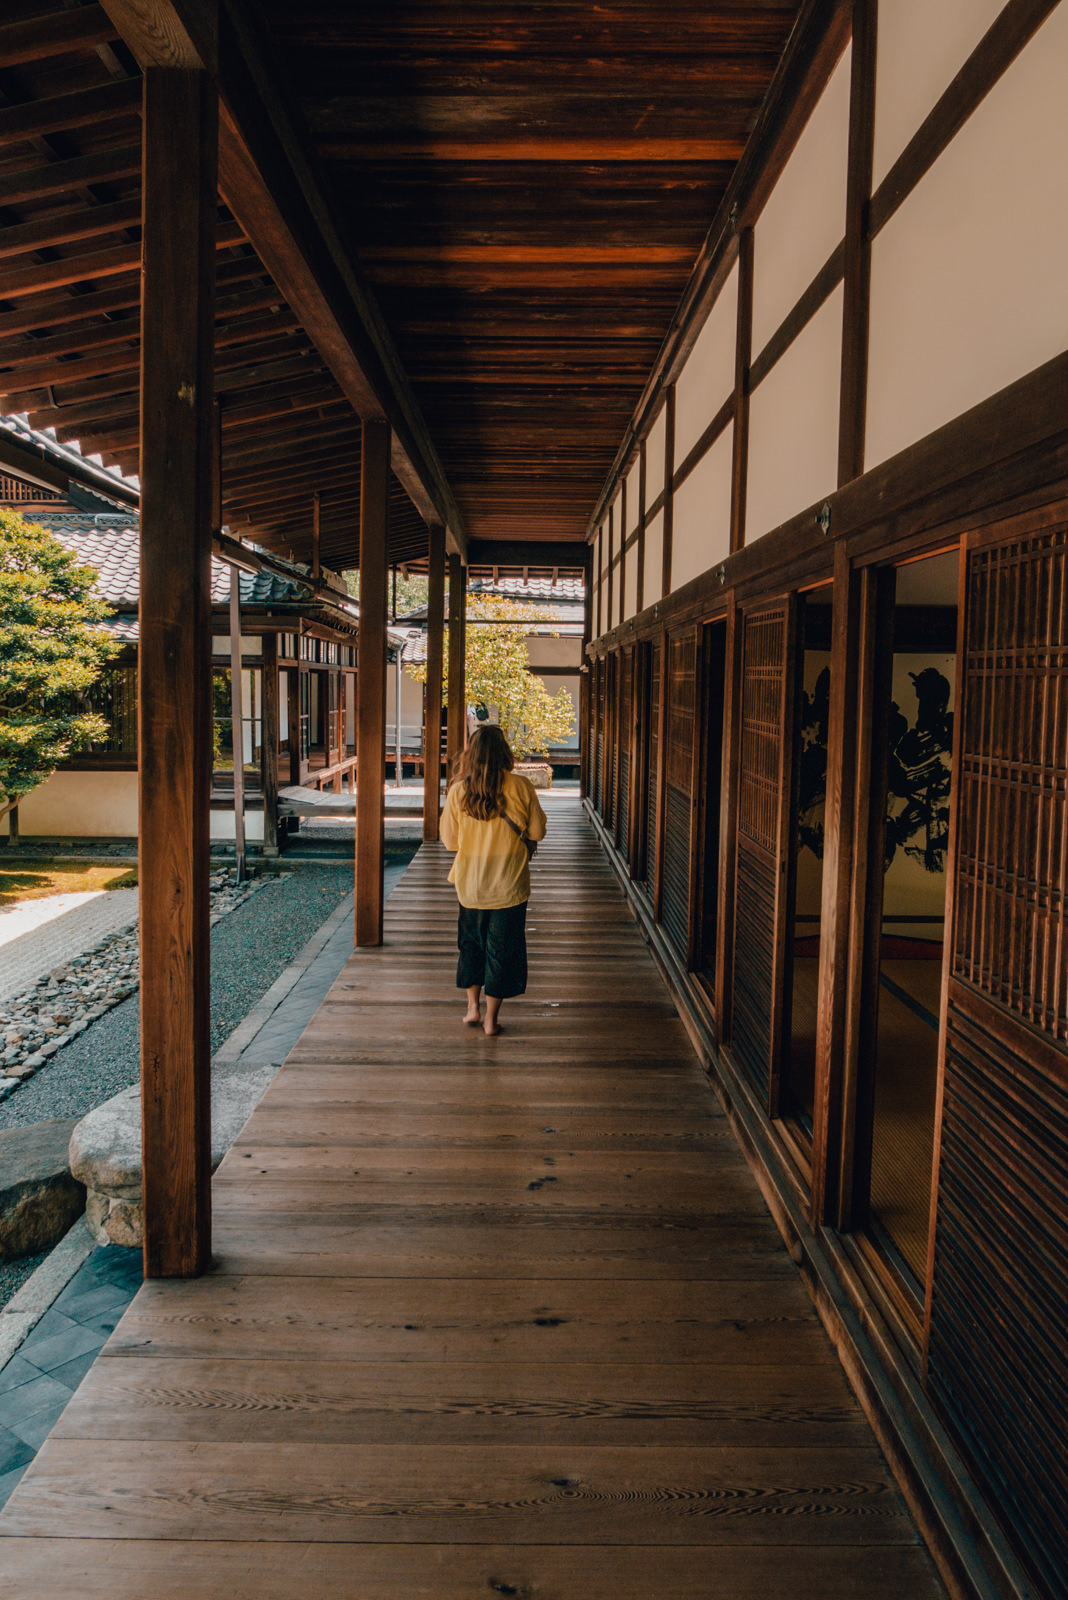 Kennin-ji Tempel in Kyoto